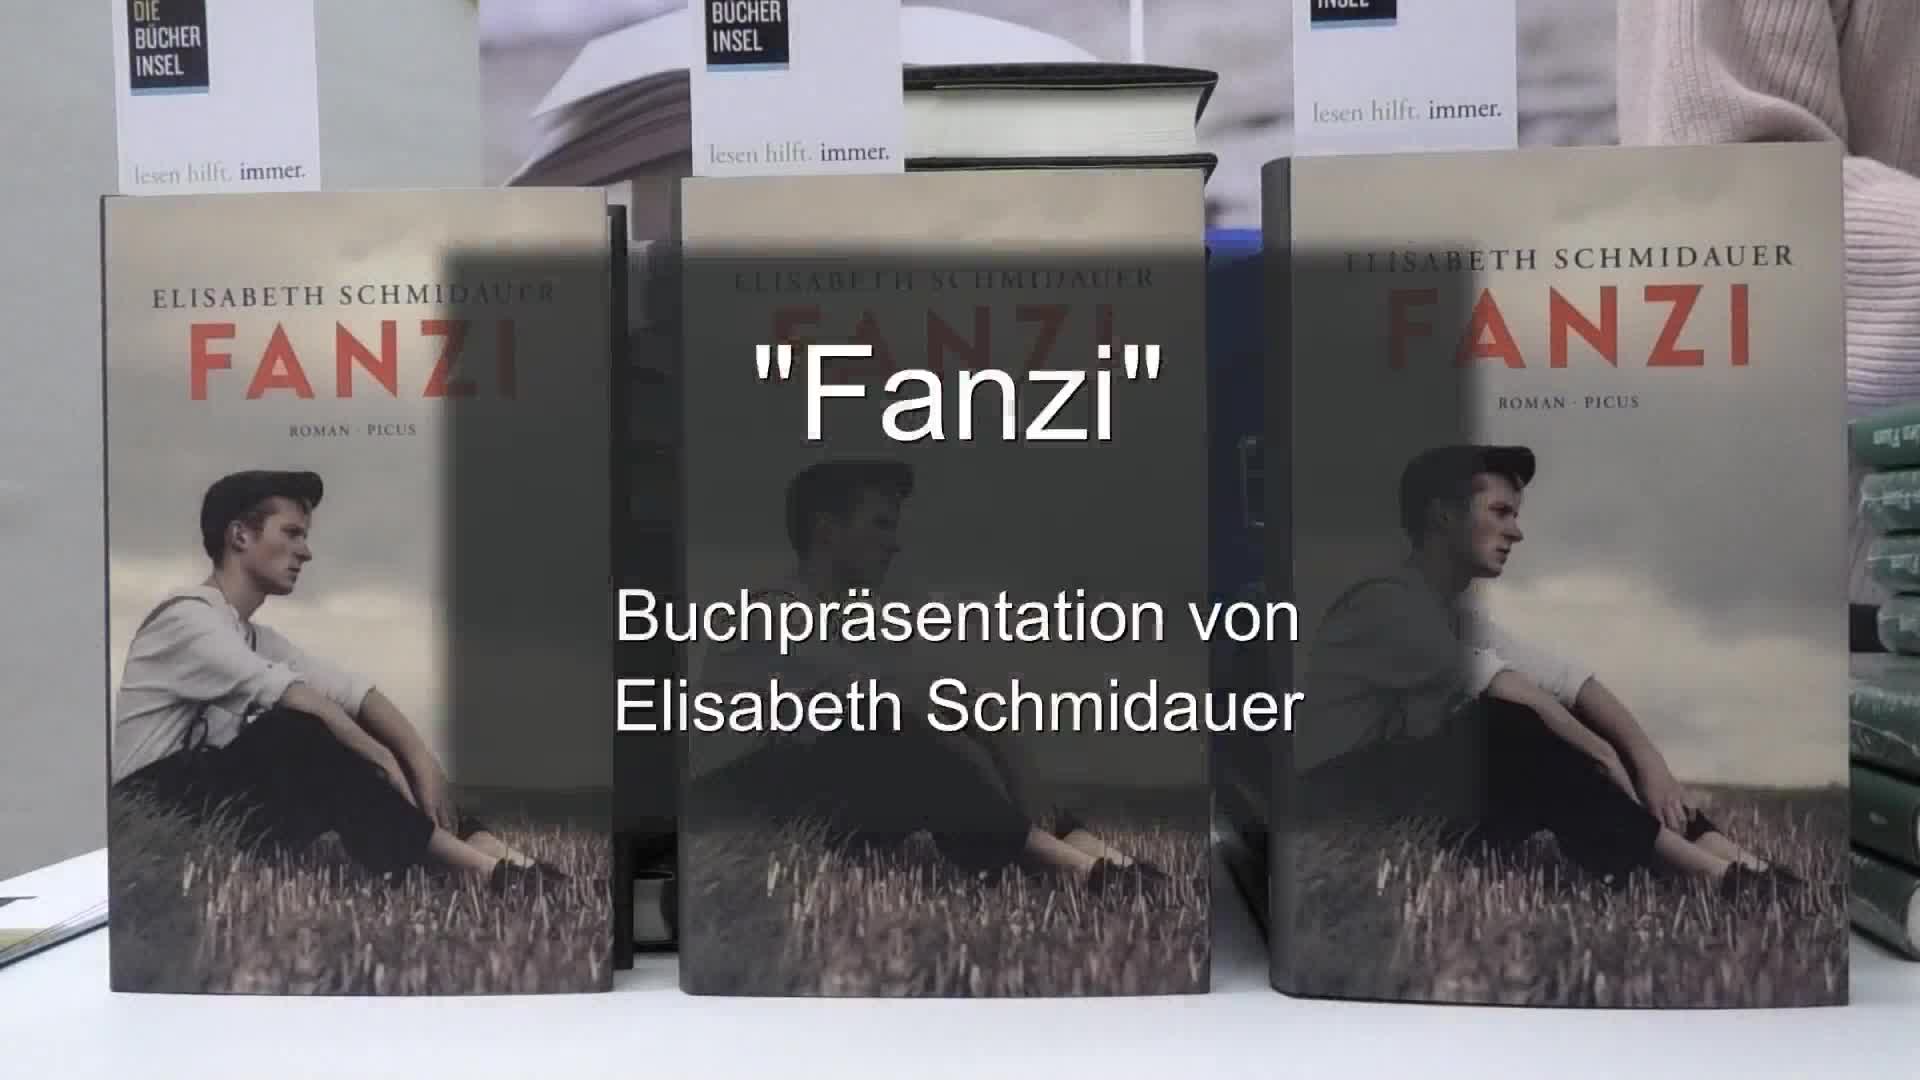 Fanzi - Buchpräsentation